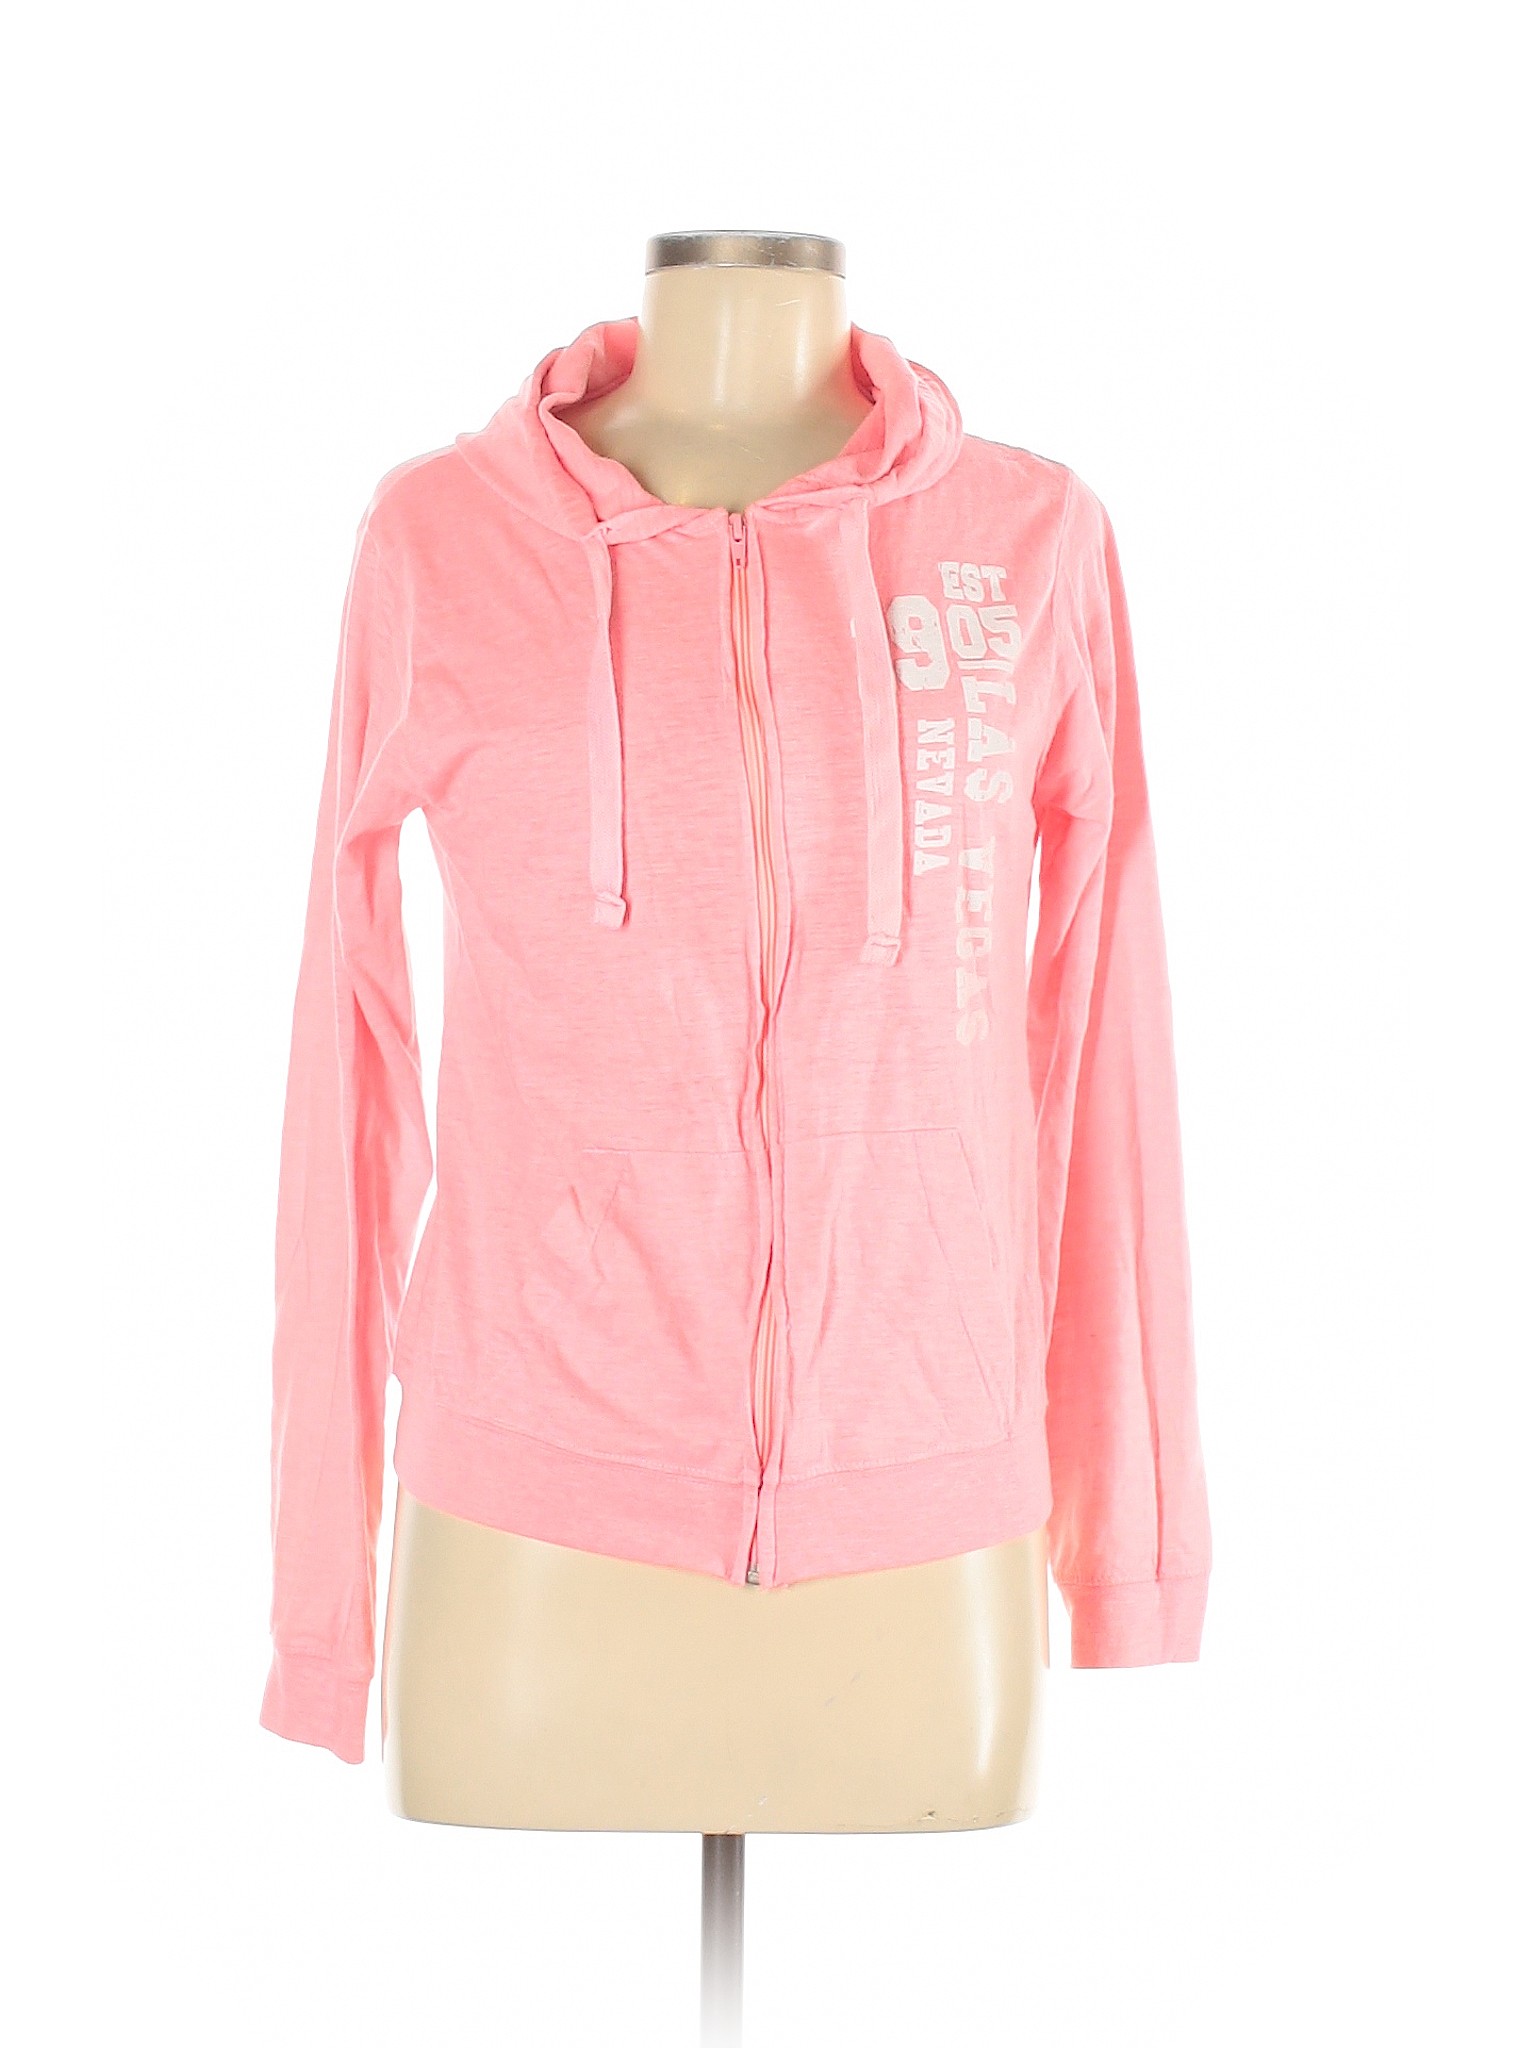 Ragwear USA Women Pink Zip Up Hoodie M | eBay